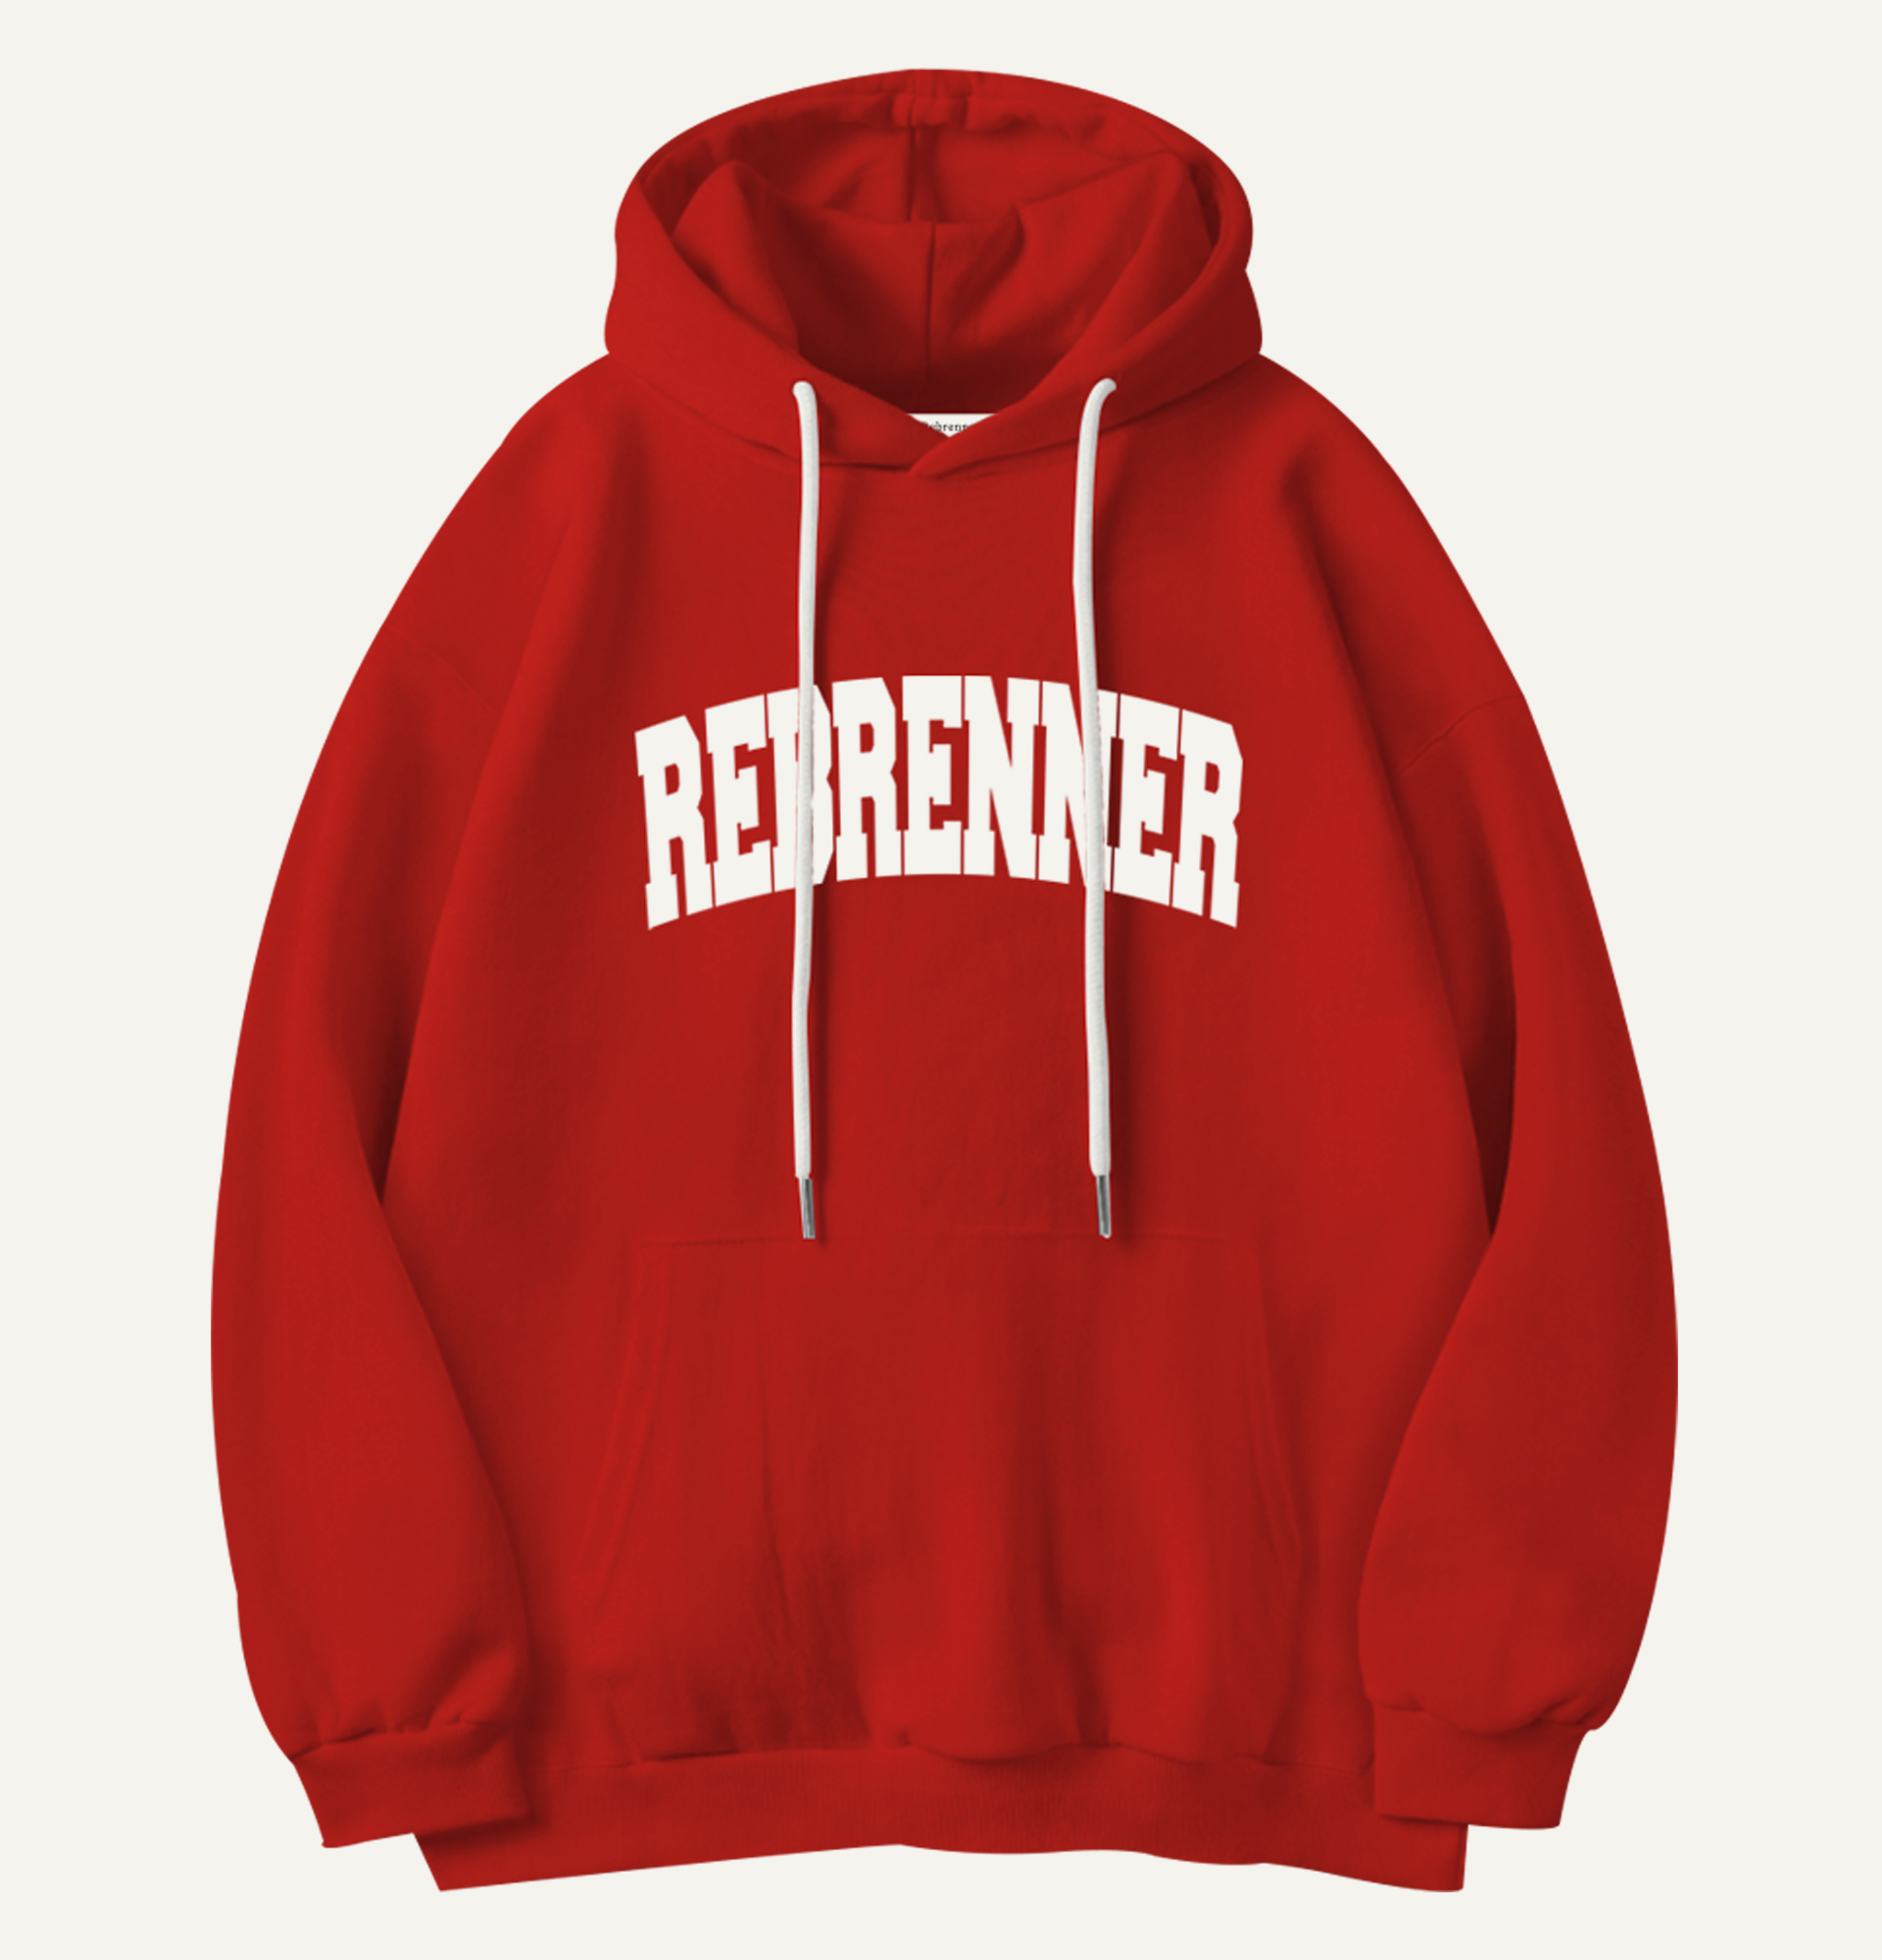 Rebrenner signature sweat hoodie red